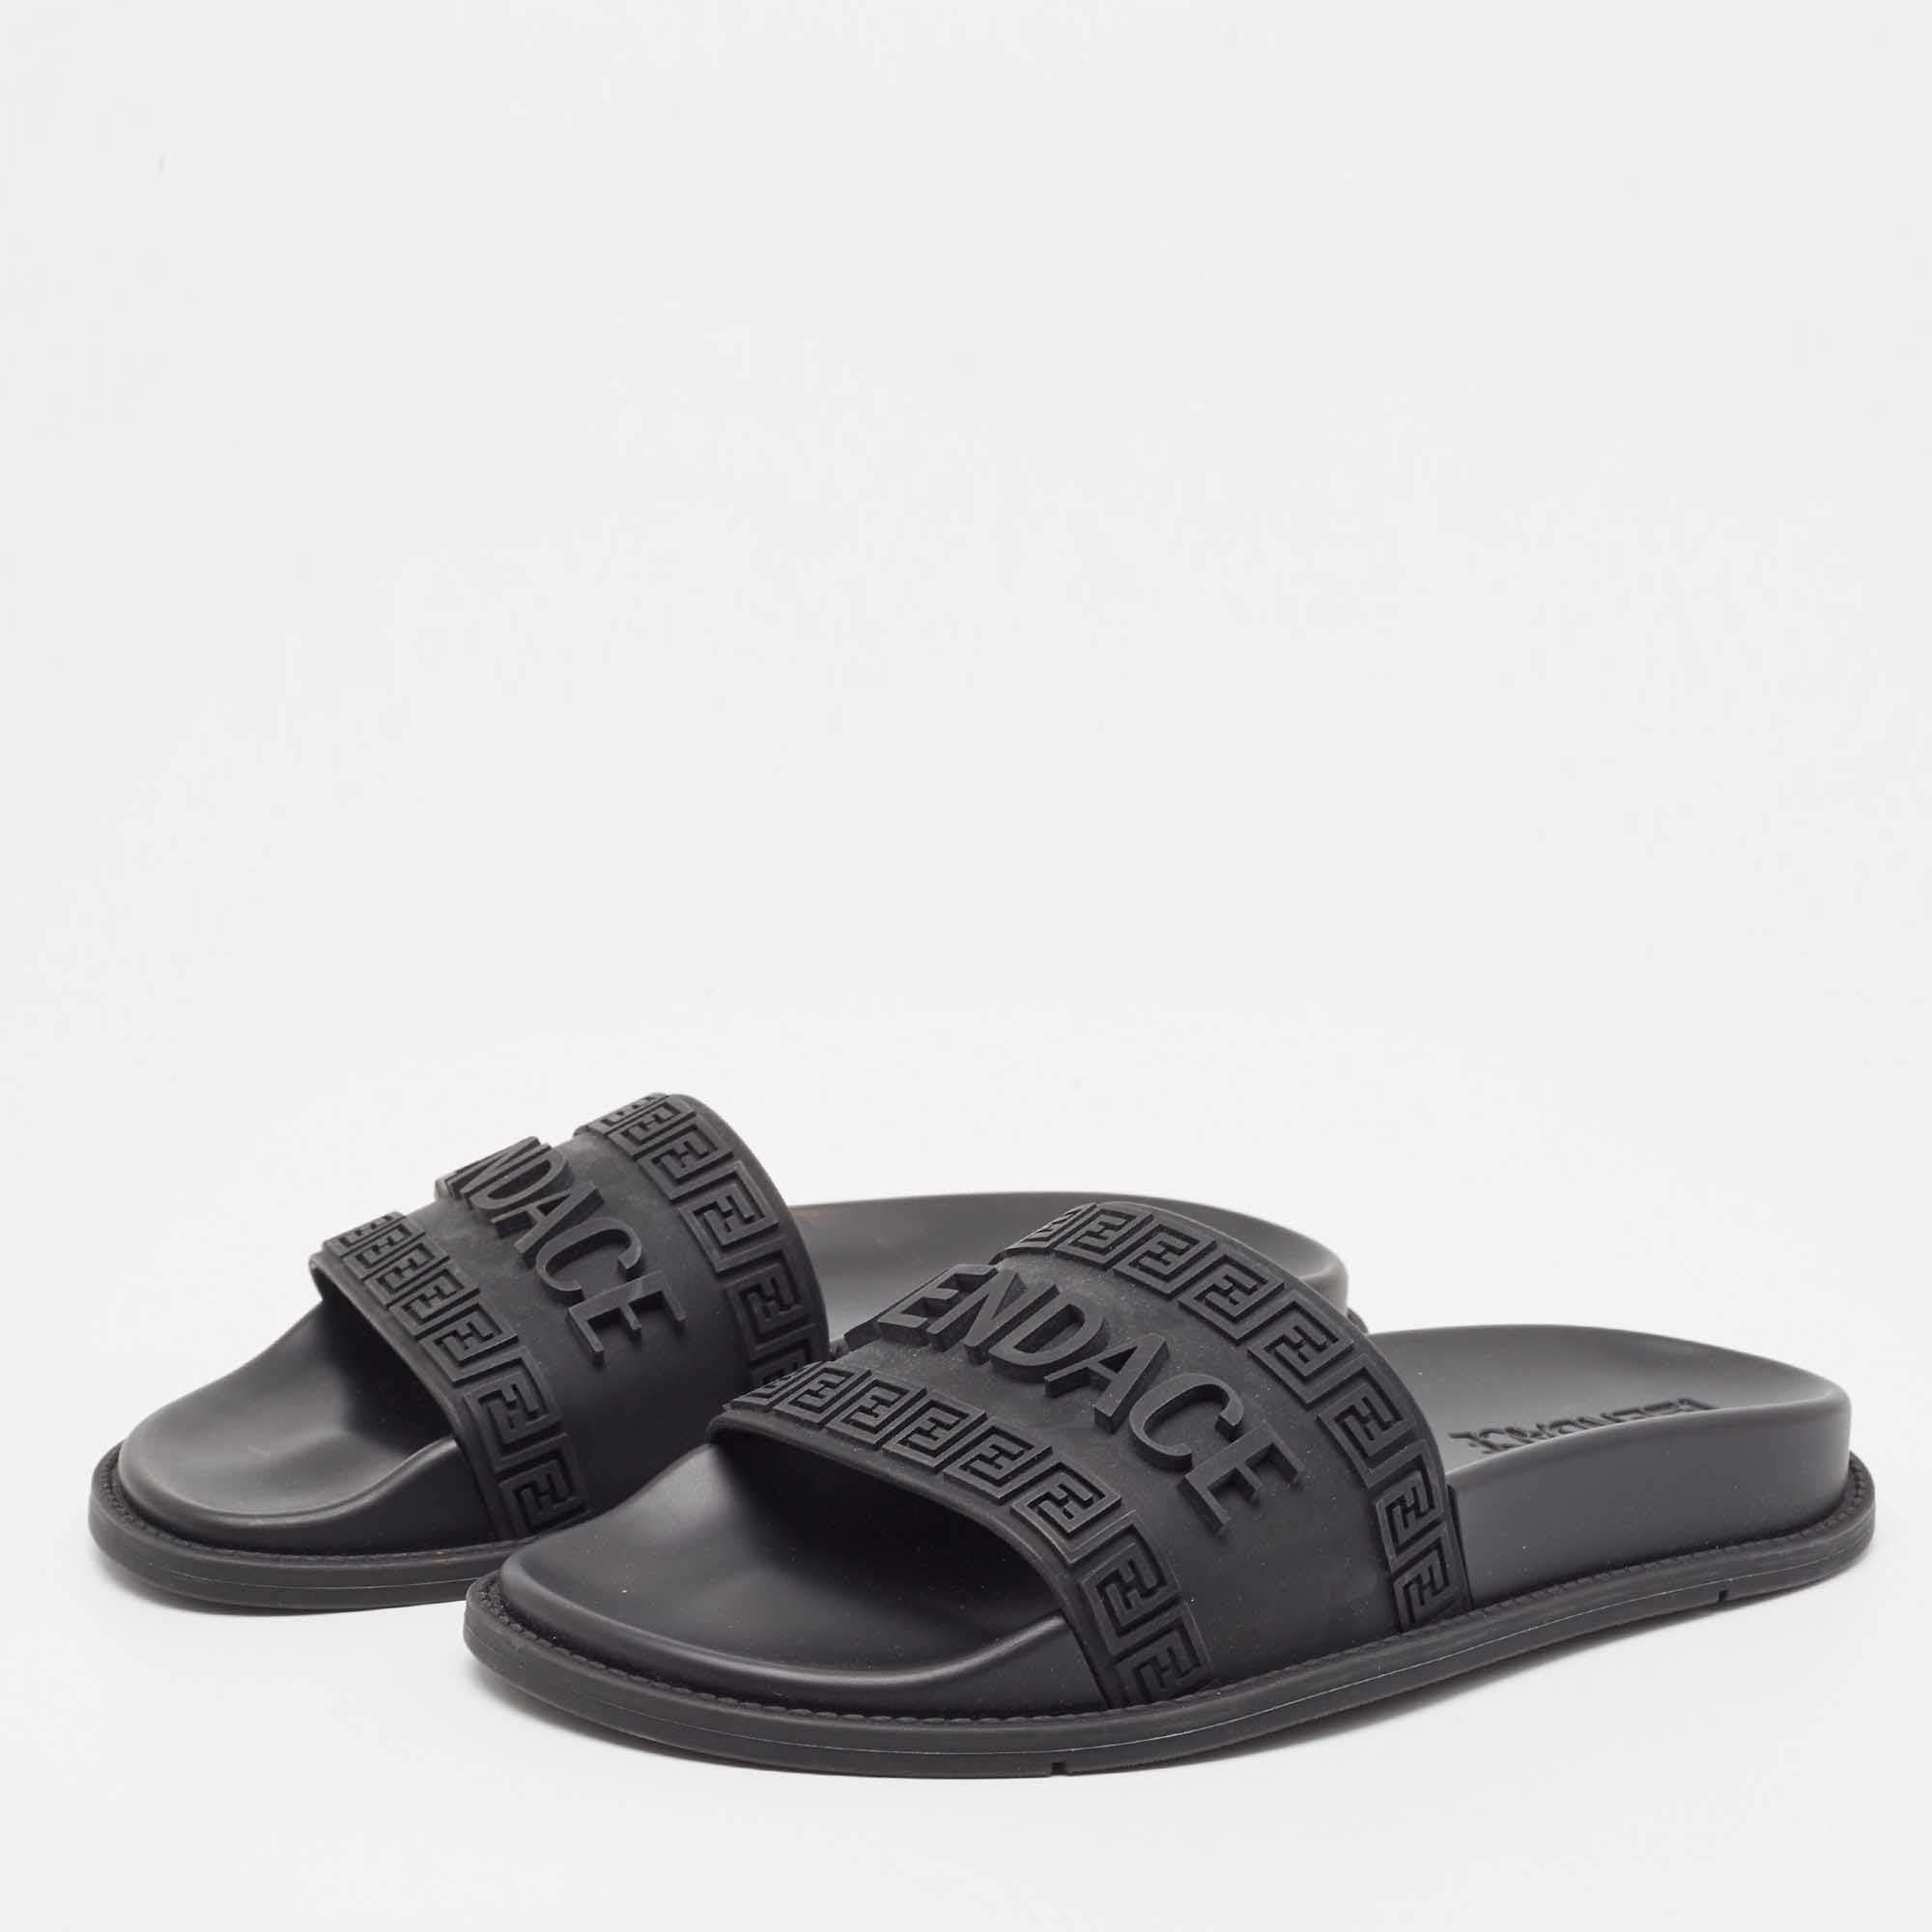 Fendi x Versace Black Rubber Flat Slides Size 37 1